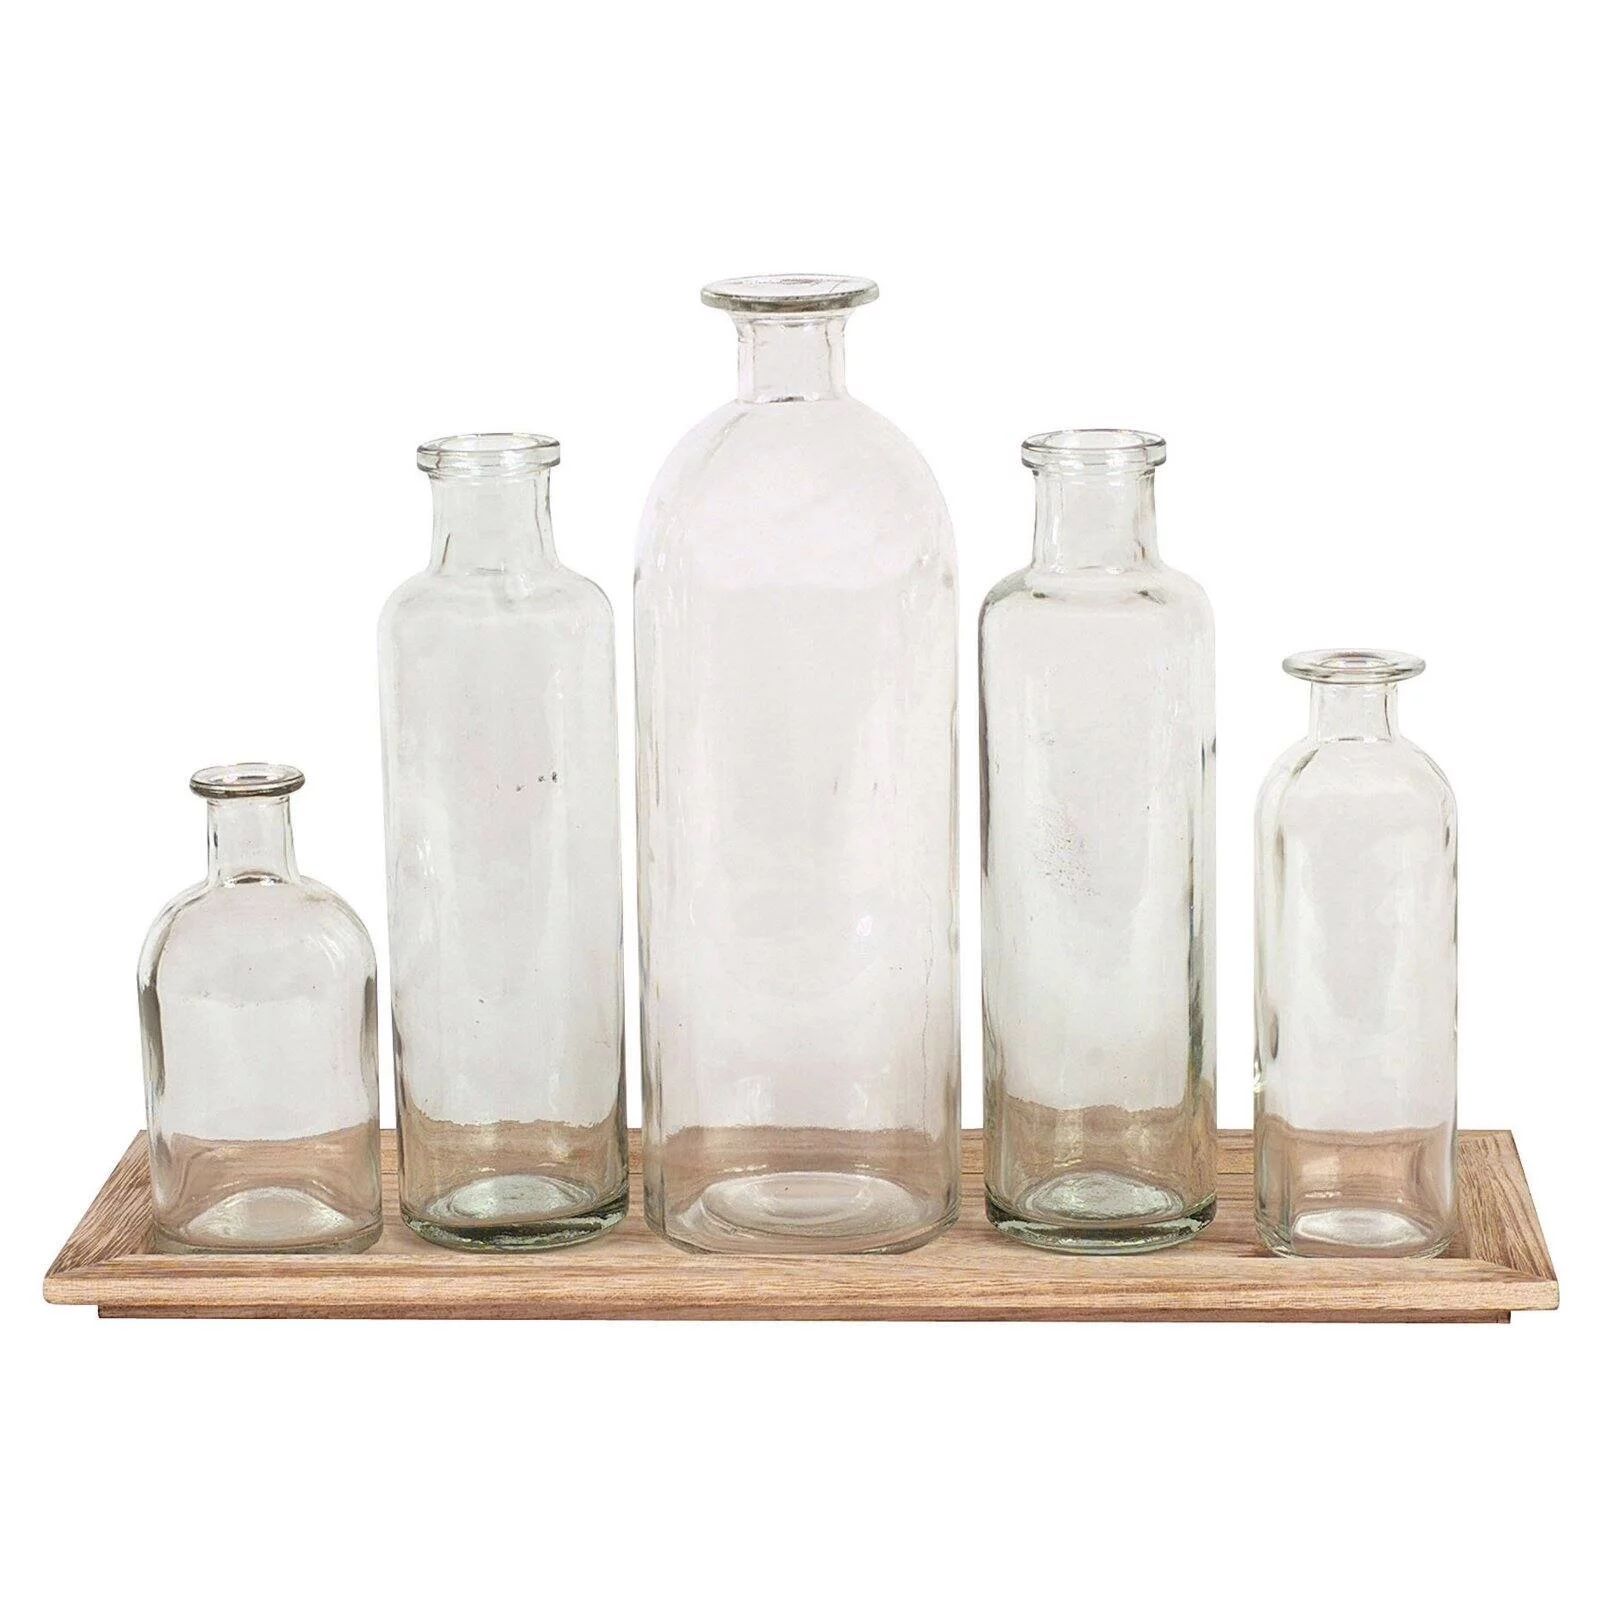 3R Studios Vintage Bottle Vases on Wood Tray - Set of 5 | Walmart (US)